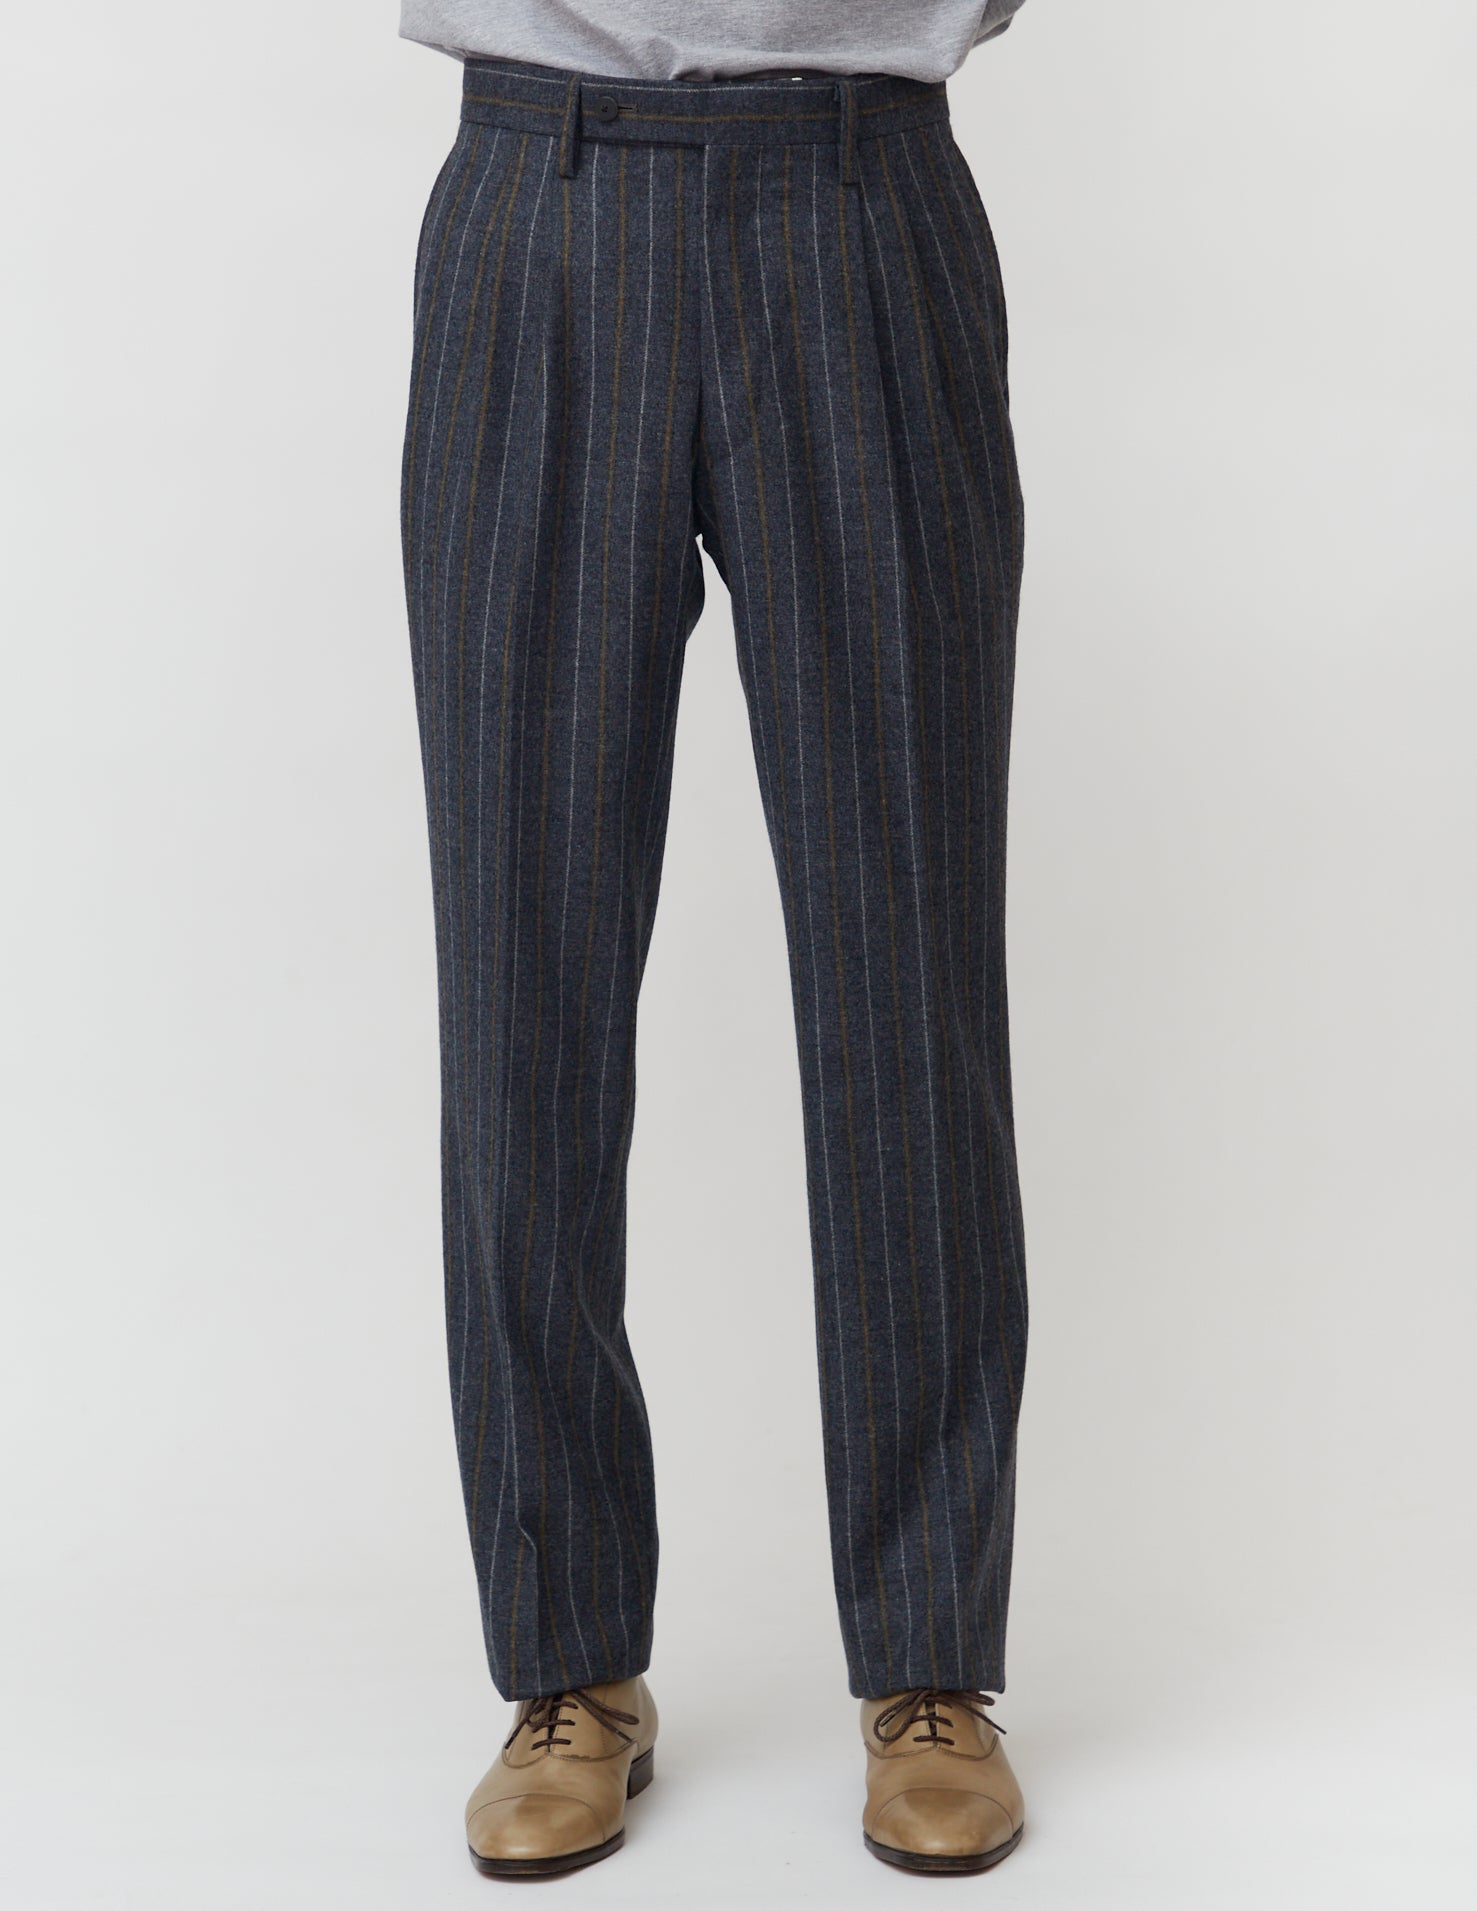 Tailored Pants charcoal grey x yellow&white stripe